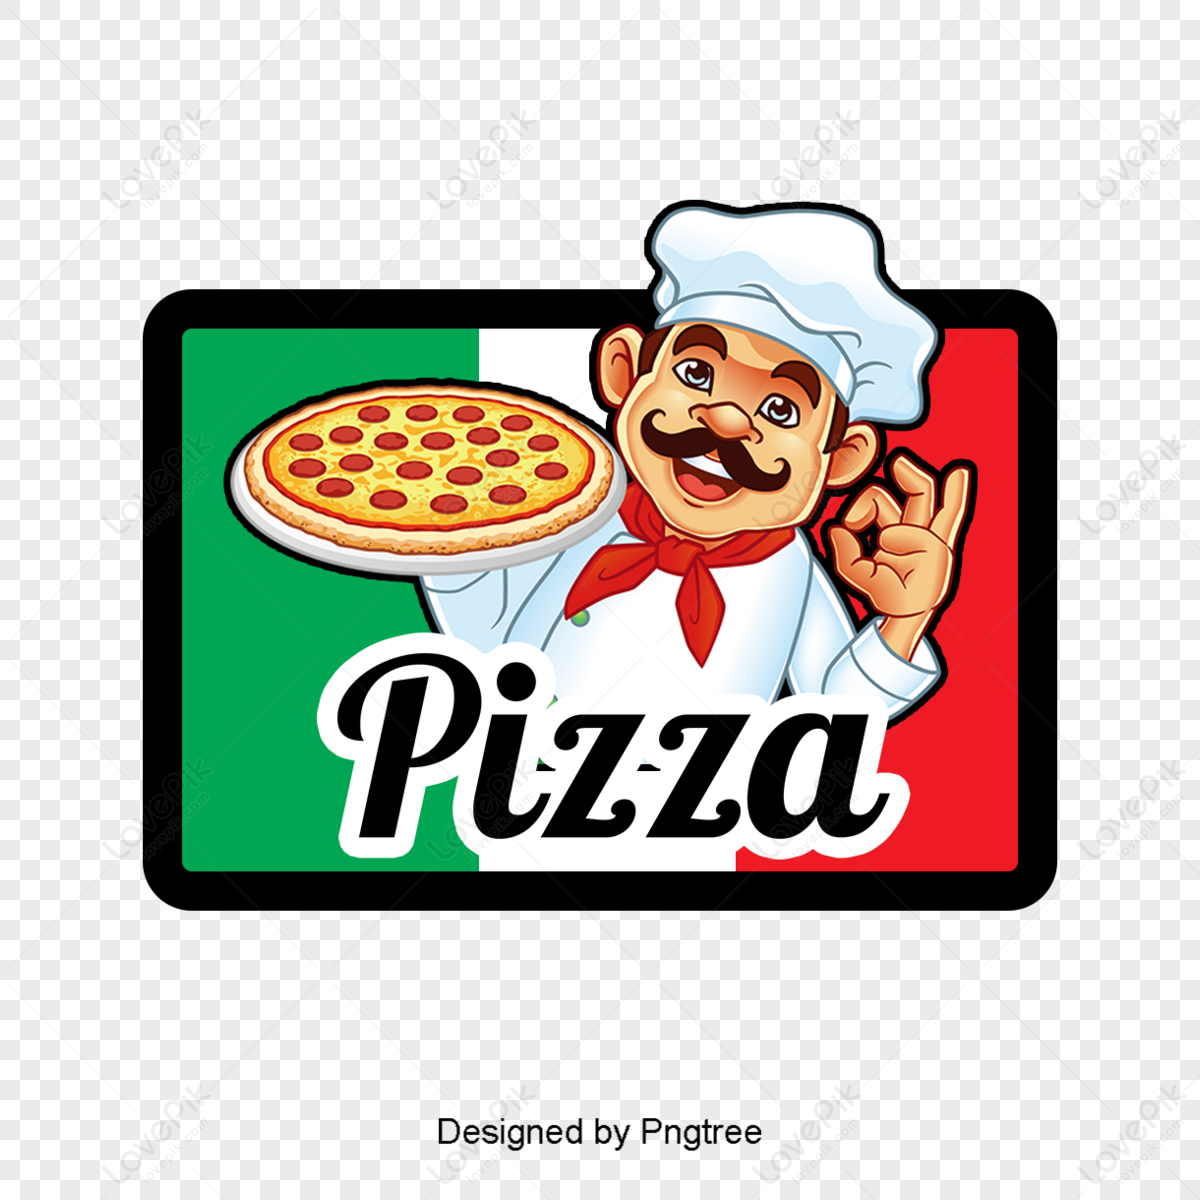 Pizza Pizza Logo PNG Transparent & SVG Vector - Freebie Supply